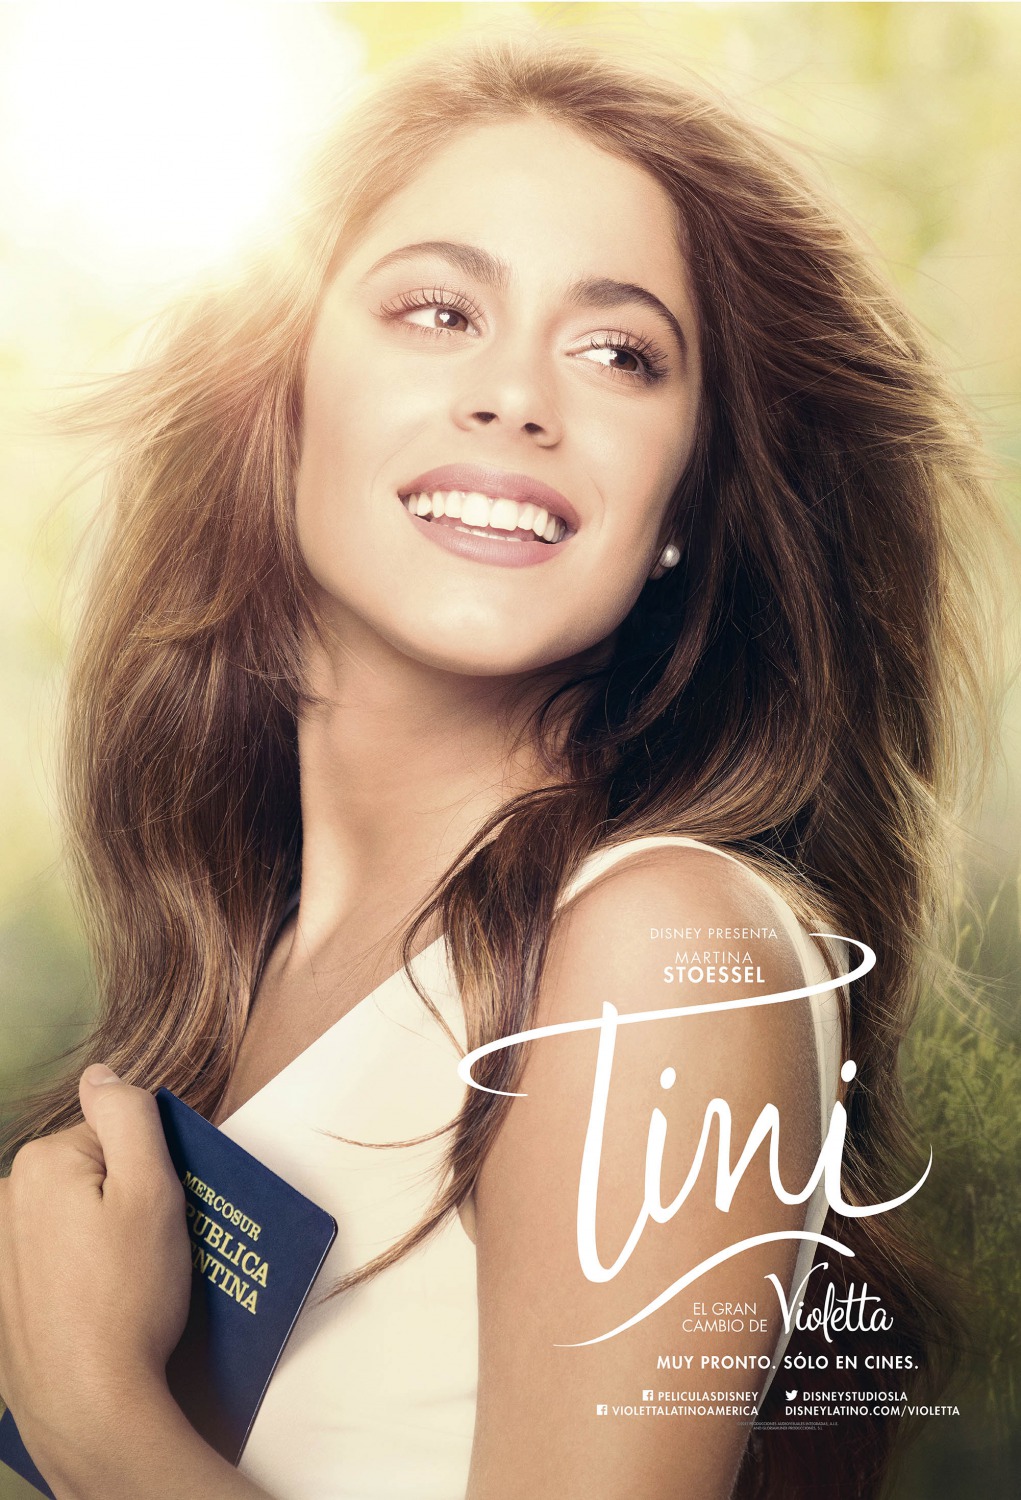 Extra Large Movie Poster Image for Tini: El gran cambio de Violetta (#1 of 12)